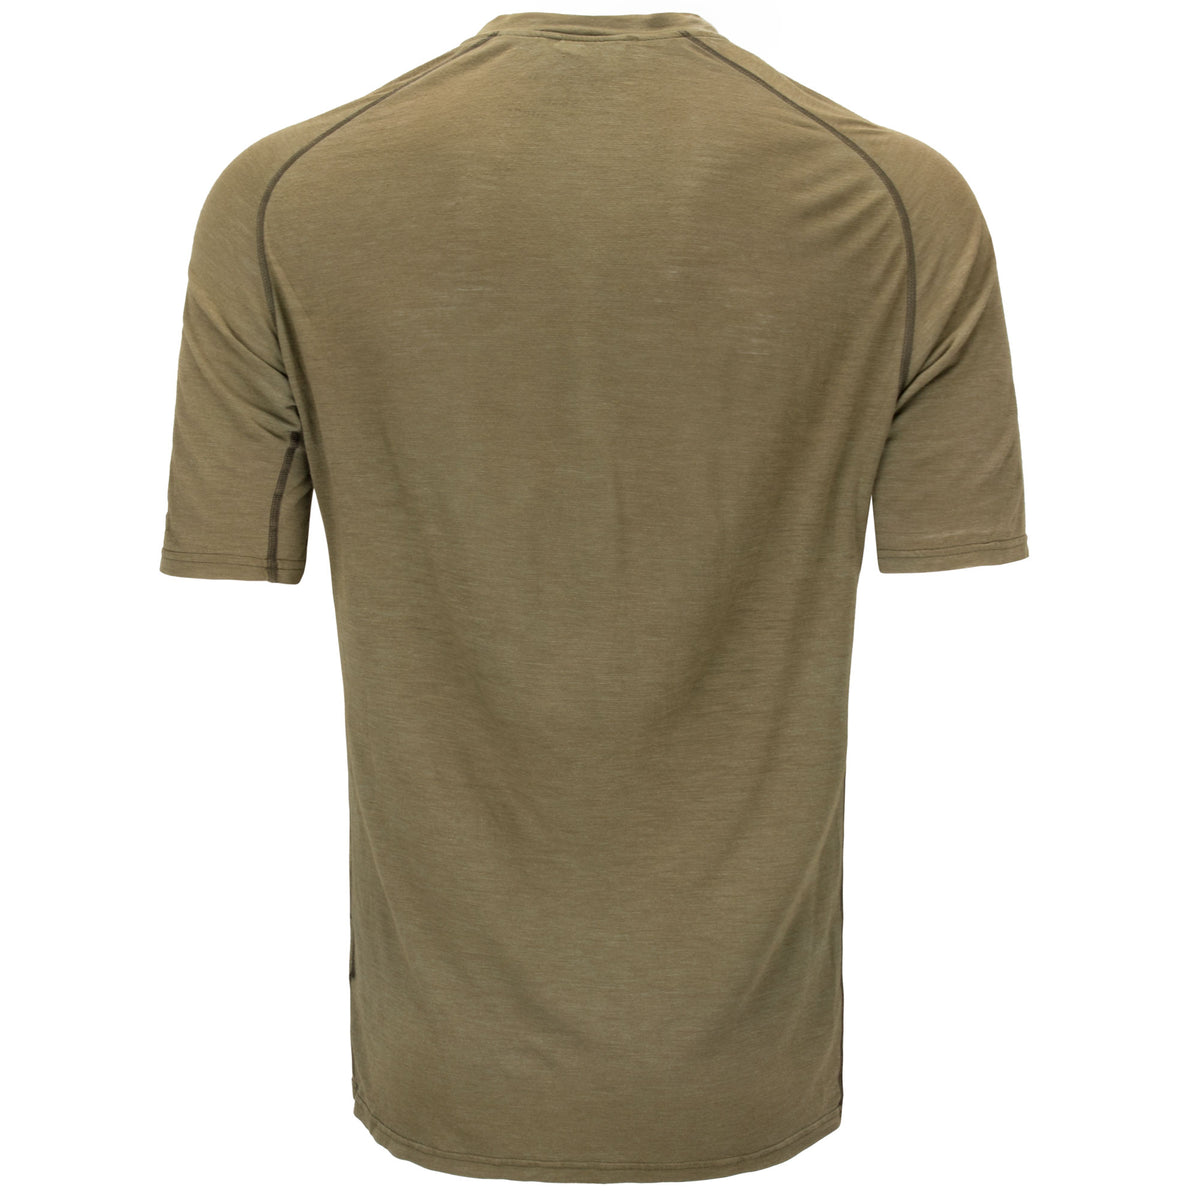 Dutch Army Undershirt | TAIGA Brand